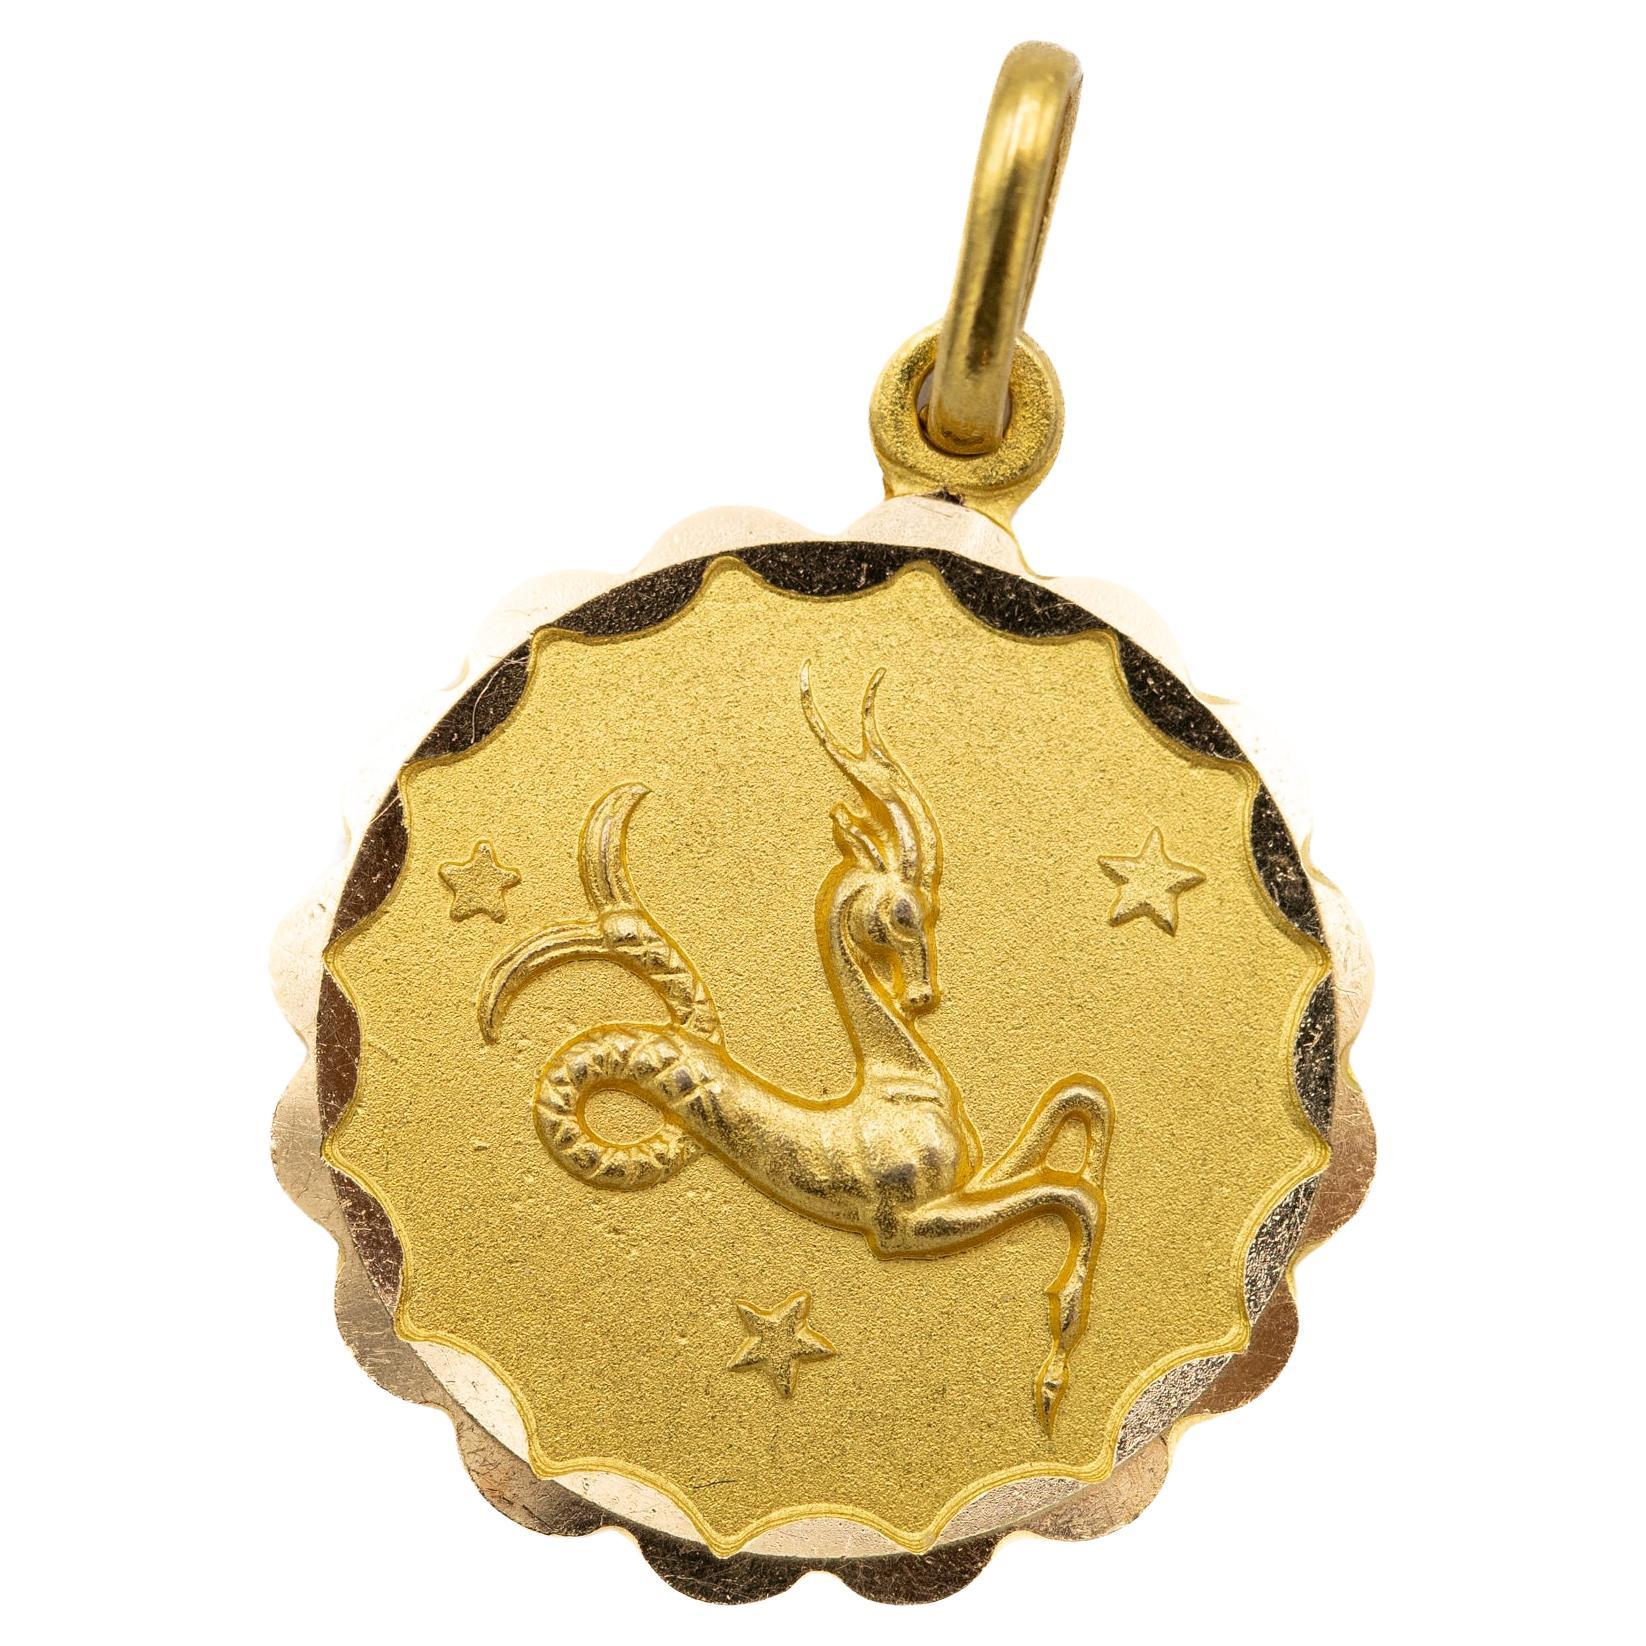 Vintage 18 k Italian zodiac charm pendant - Capricorn charm - solid yellow gold